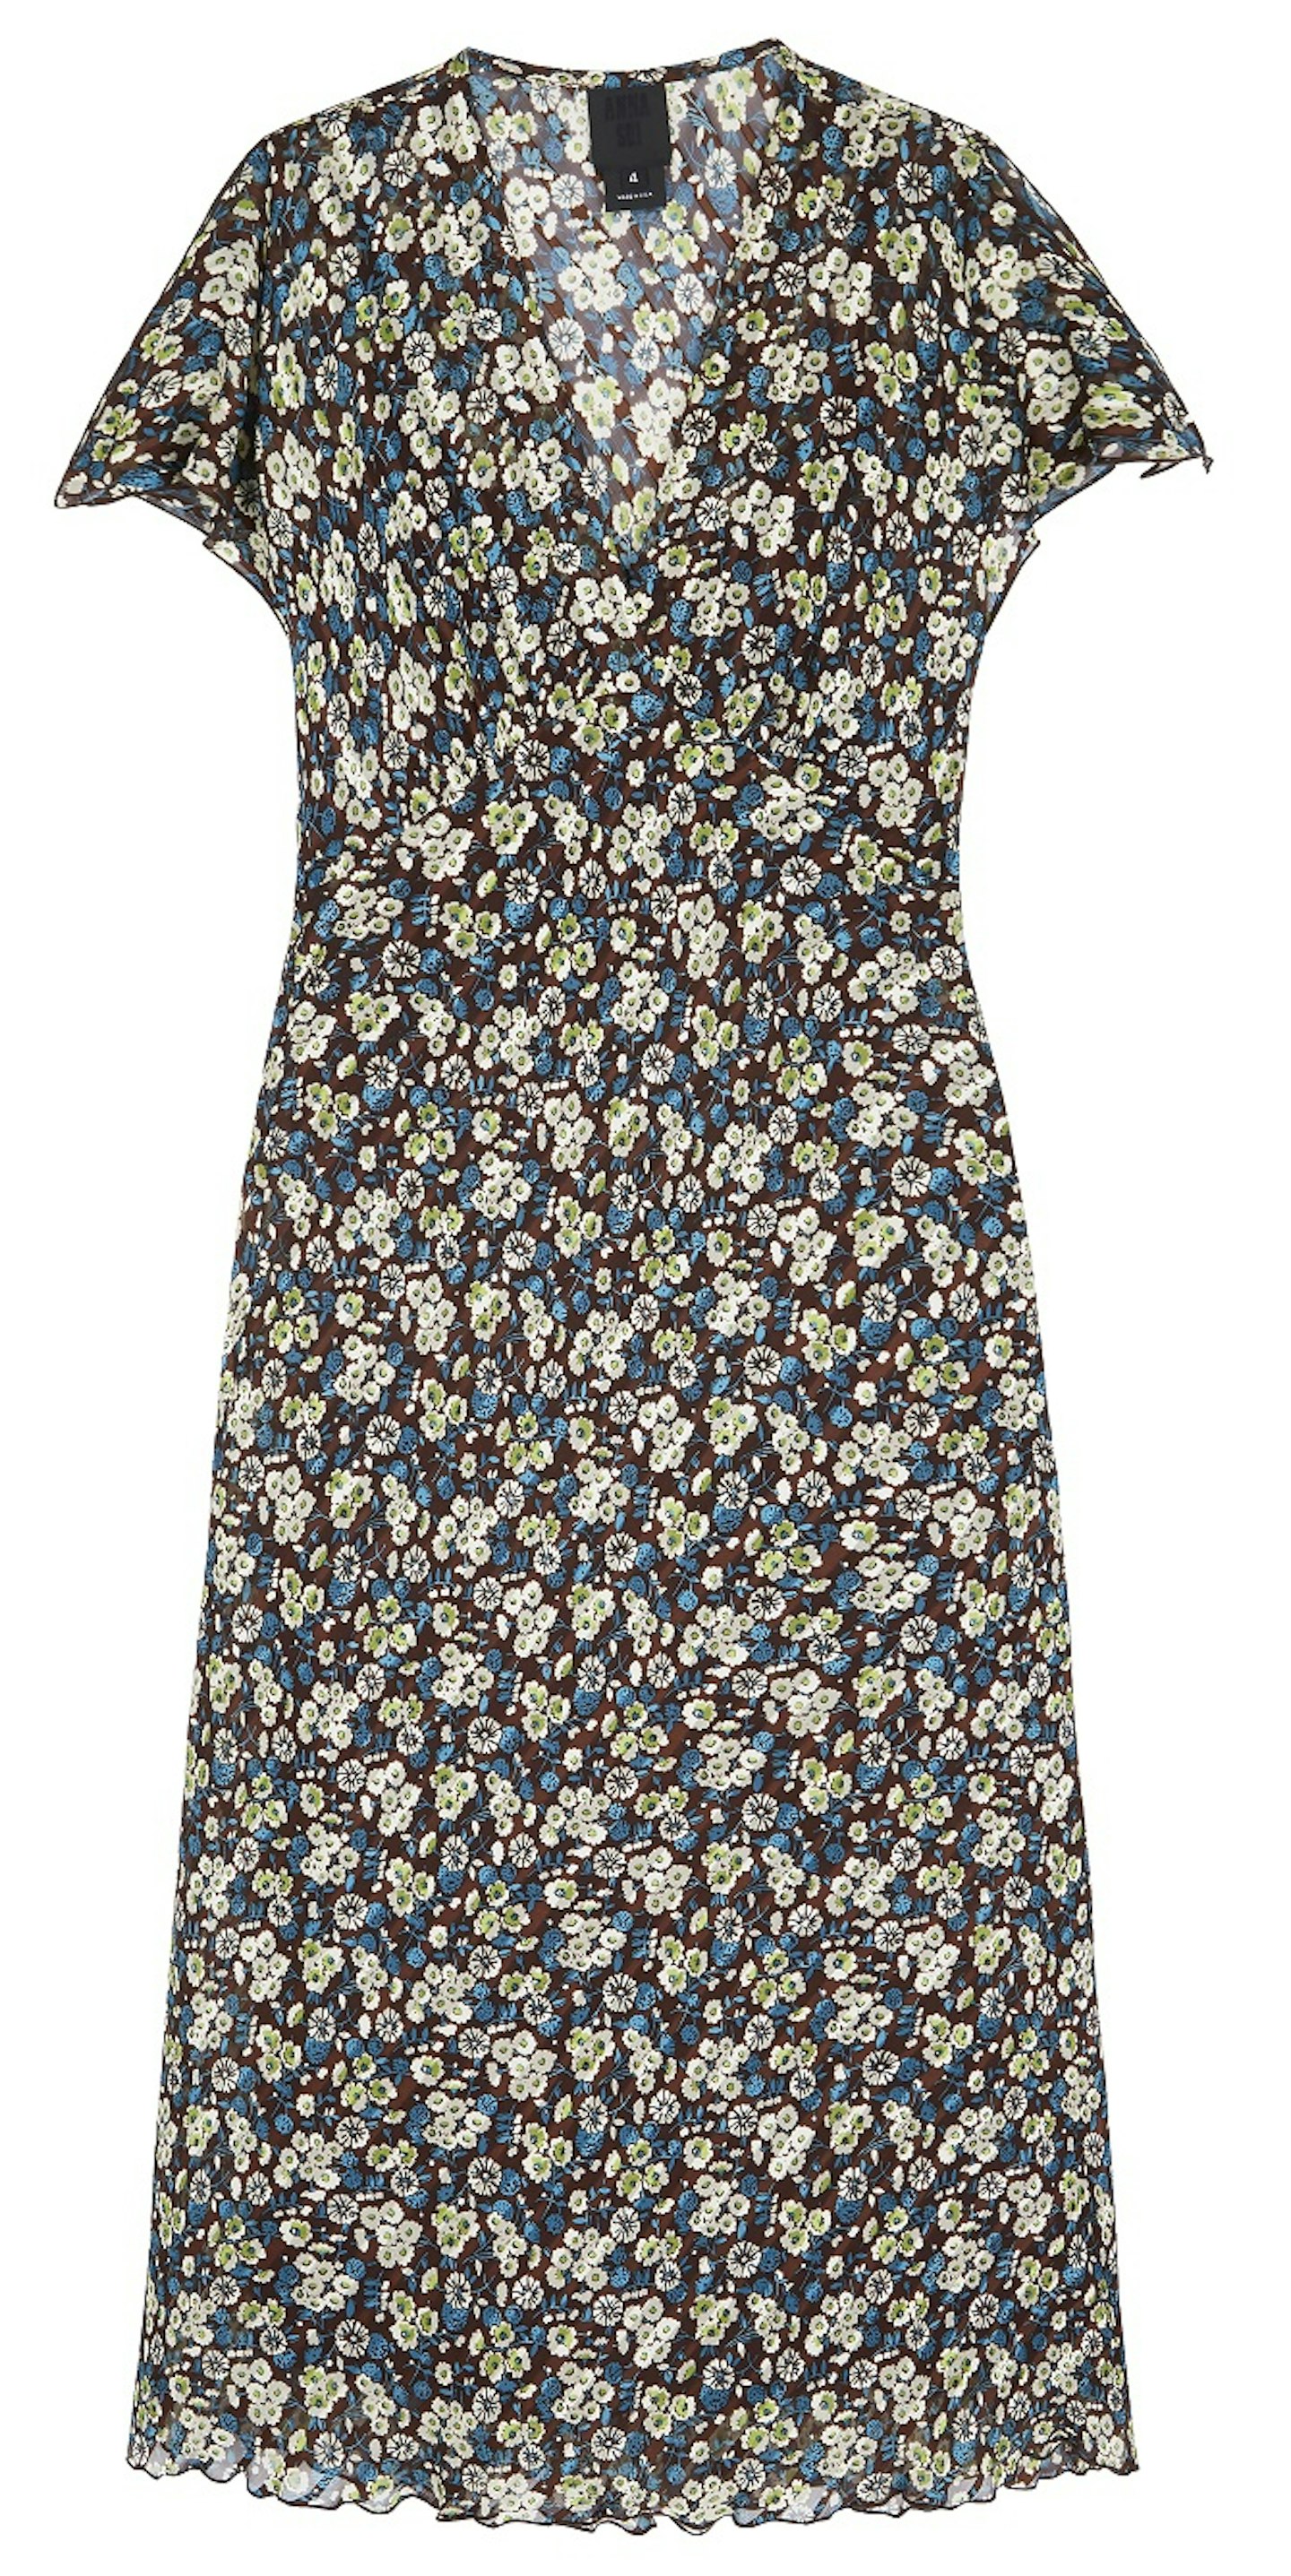 Anna Sui, Floral Dress, £299